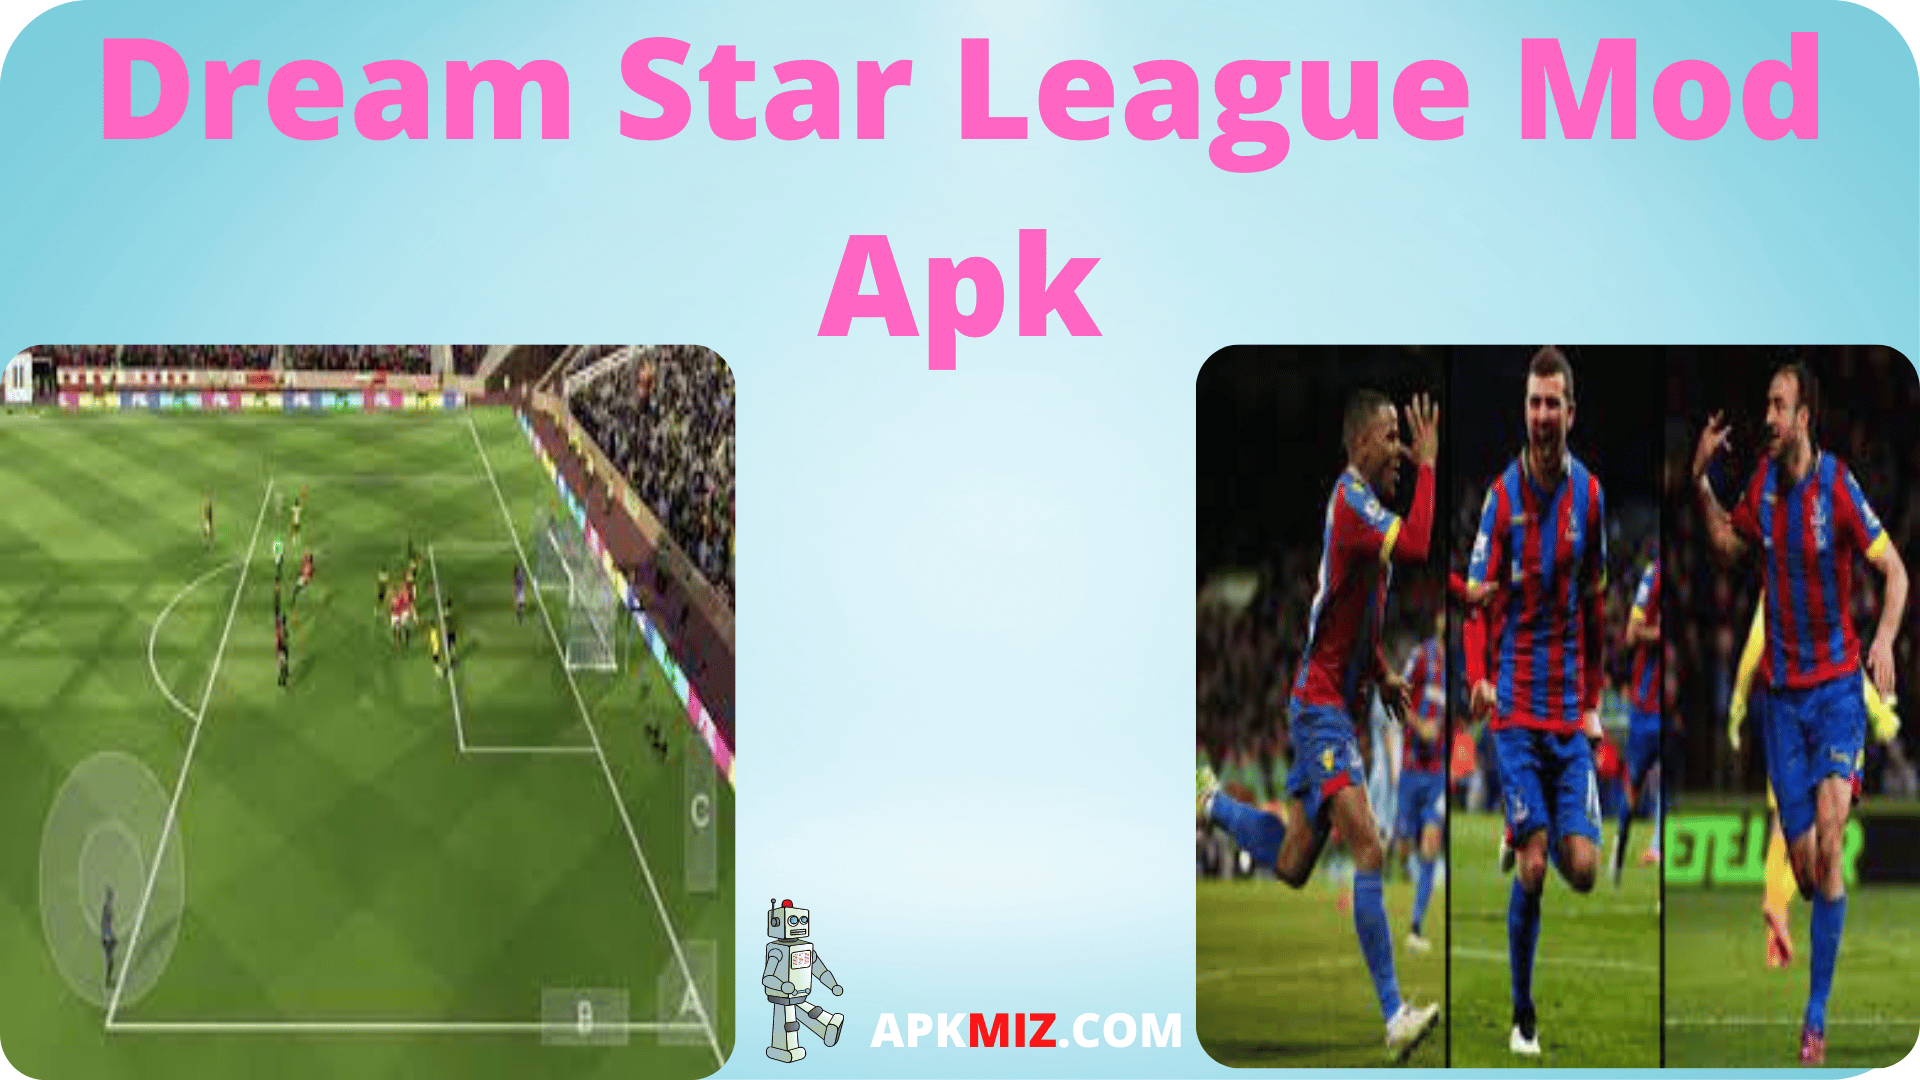 Dream Star League Mod Apk